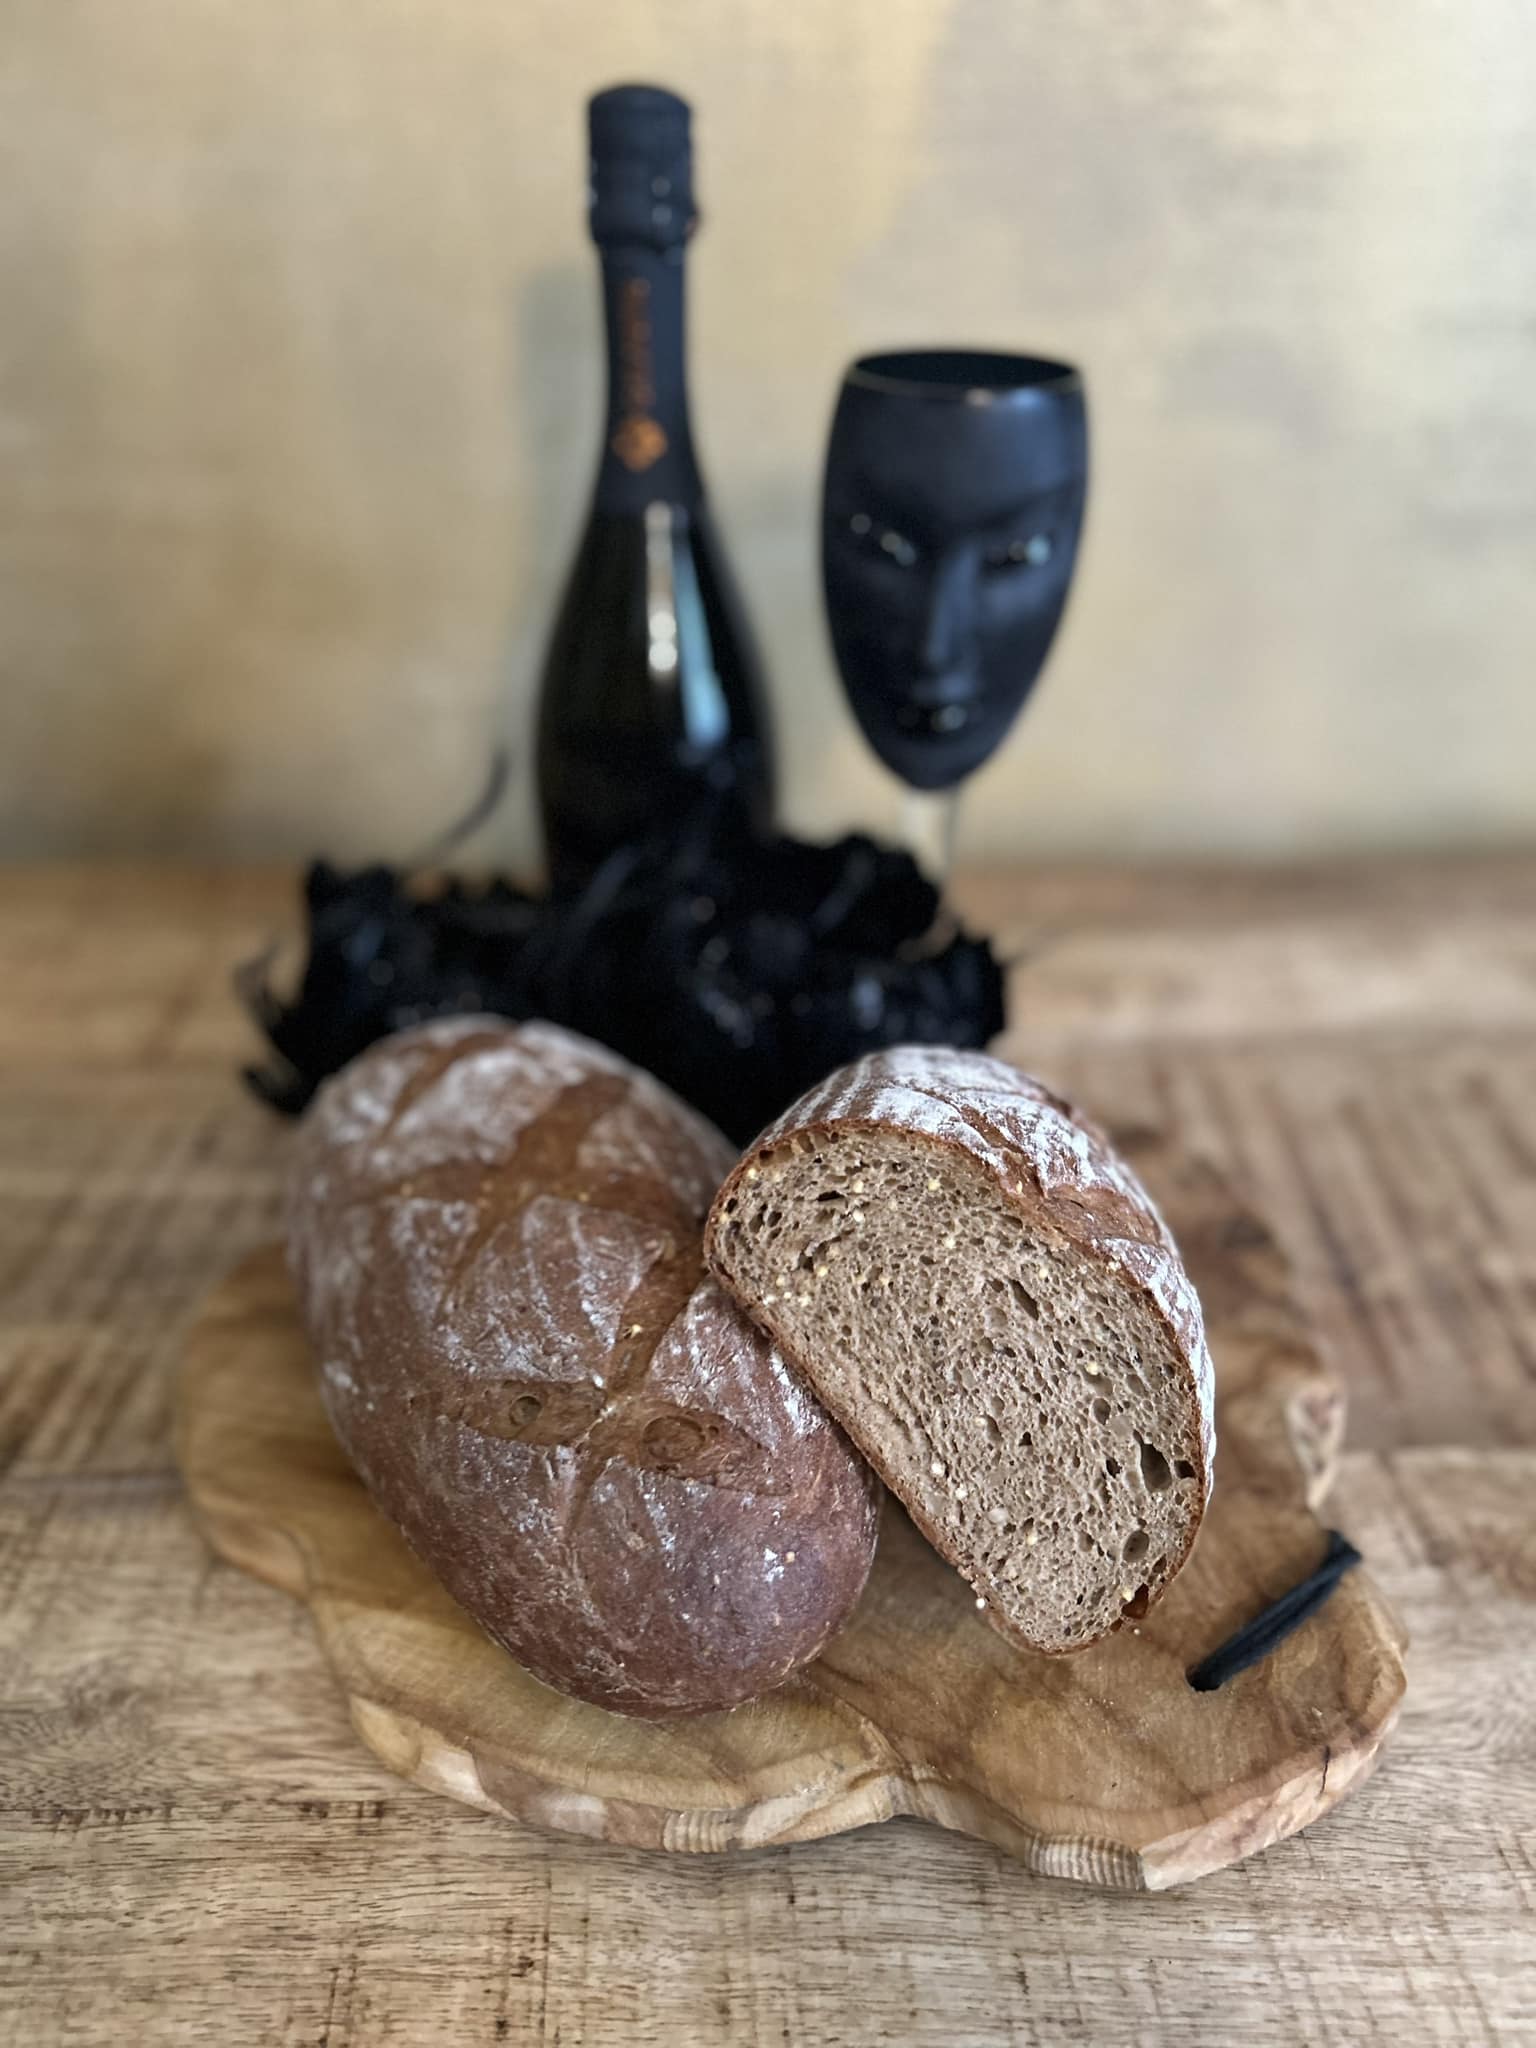 Sedlácký chléb z žitné mouky Znojmo, Třebíč, Brno, Moravský Krumlov